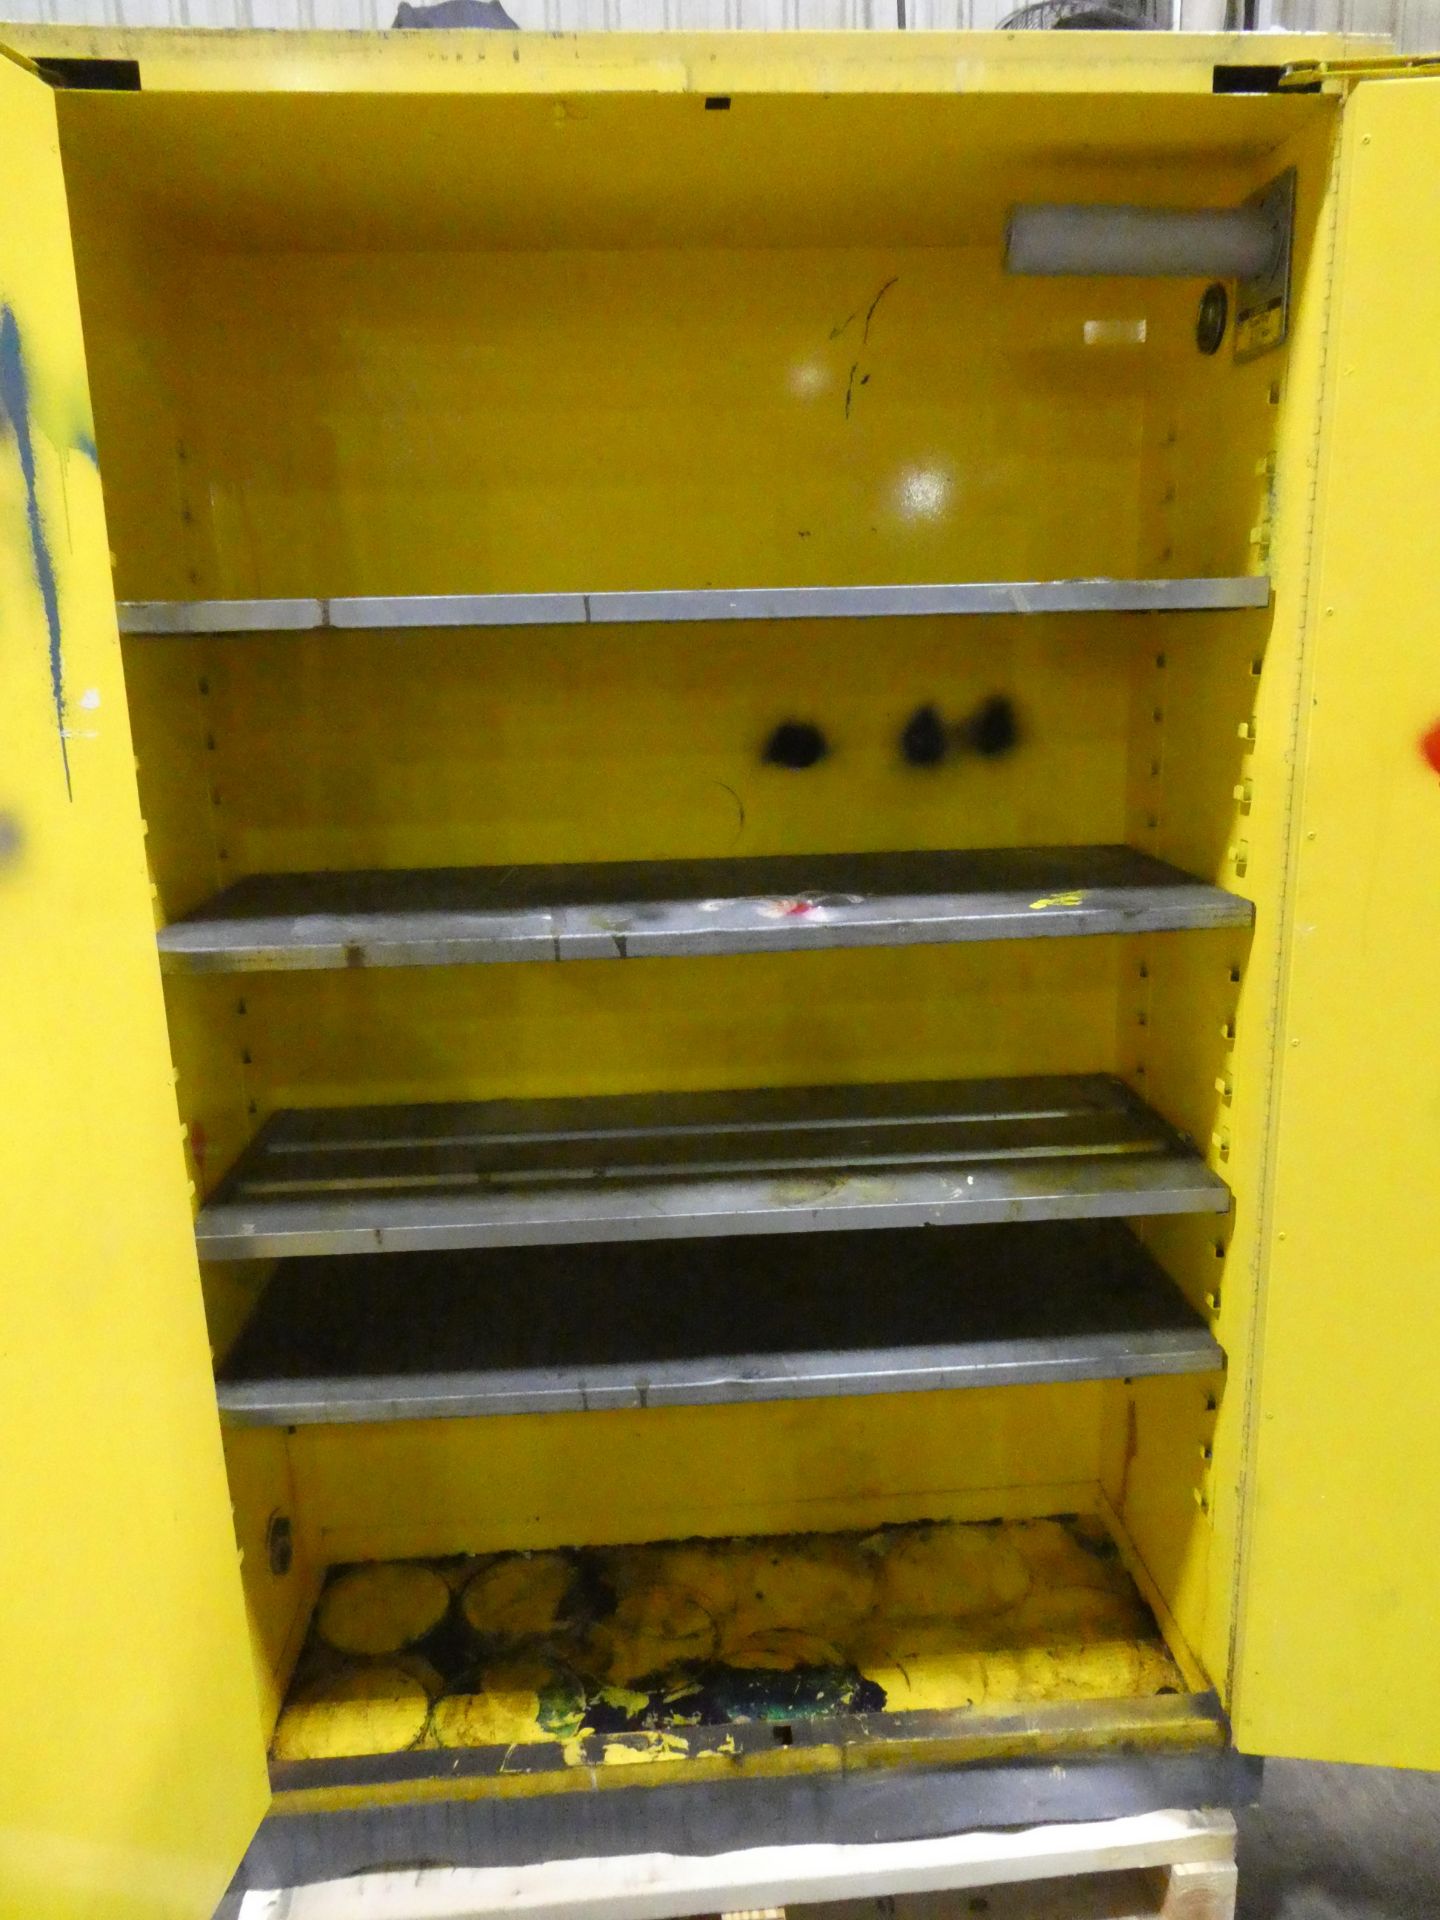 Justrite Chemical Storage Cabinet 45 Gal Capacity - Image 2 of 2